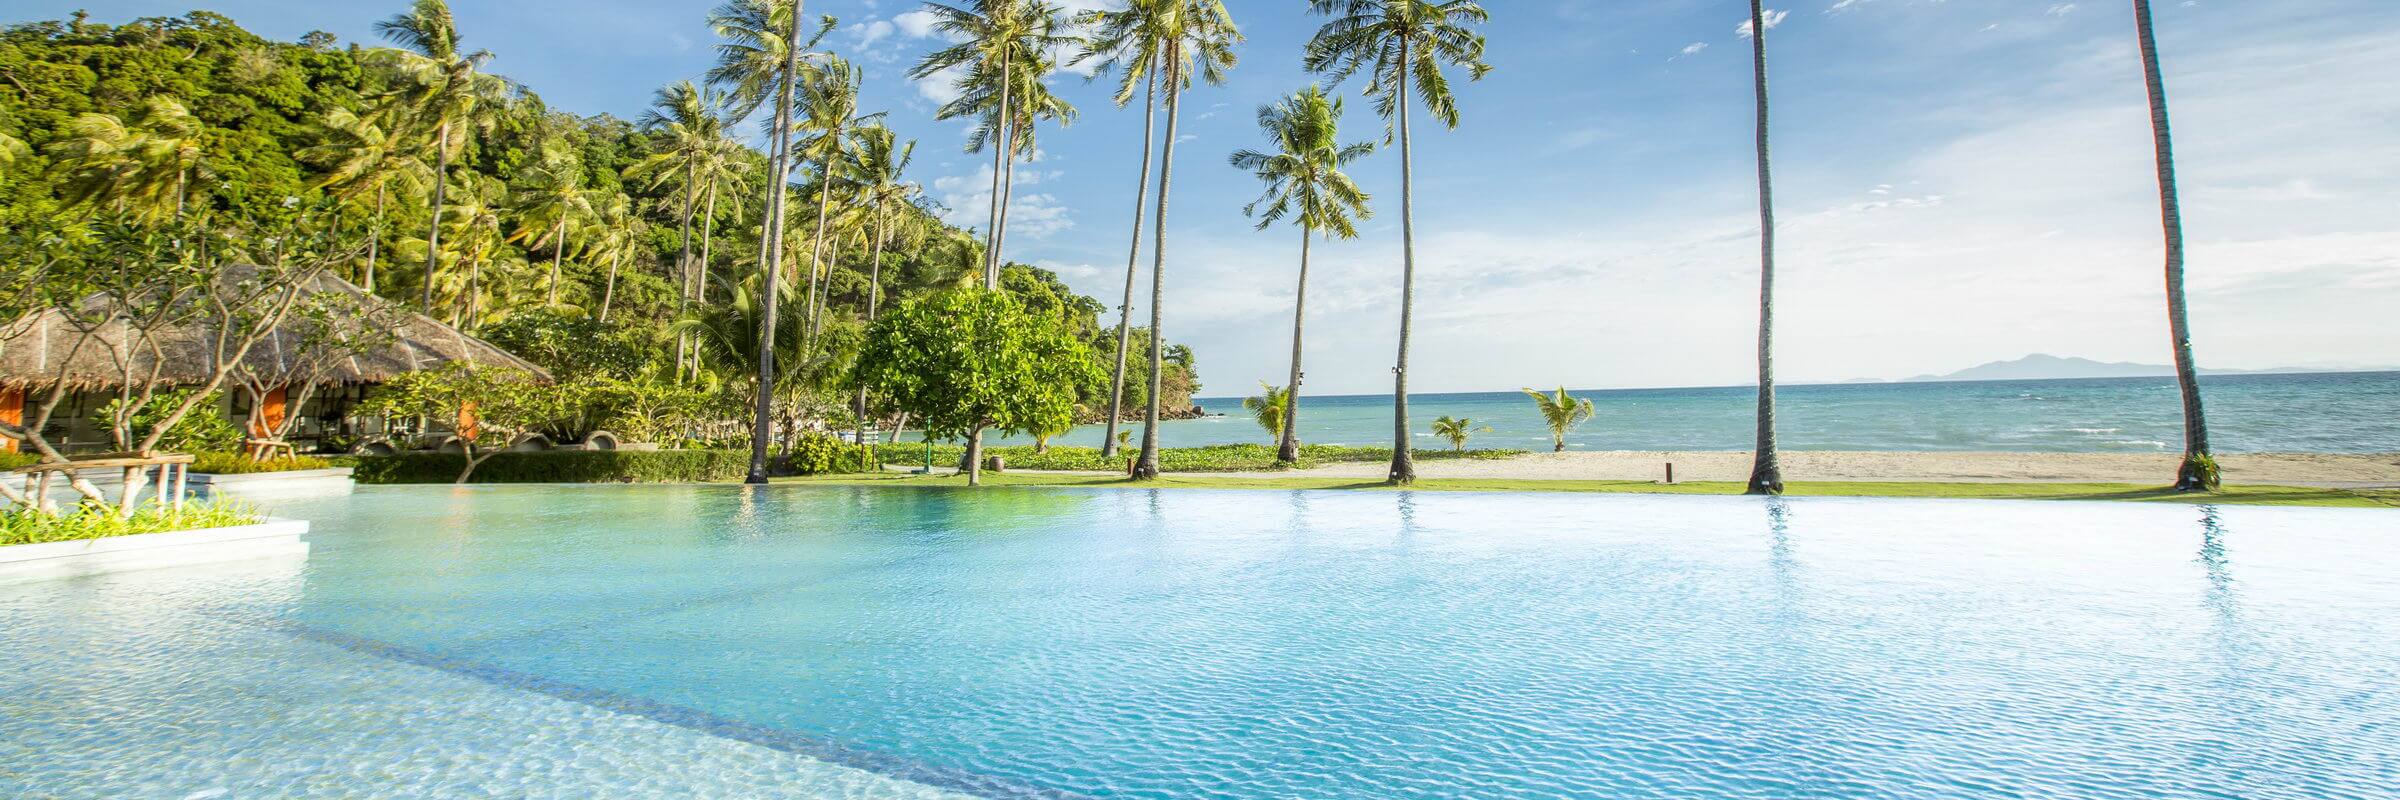 Atemberaubende Panoramasicht vom Infinity Pool im Phi Phi Island Village Beach Resort auf Koh Phi Phi